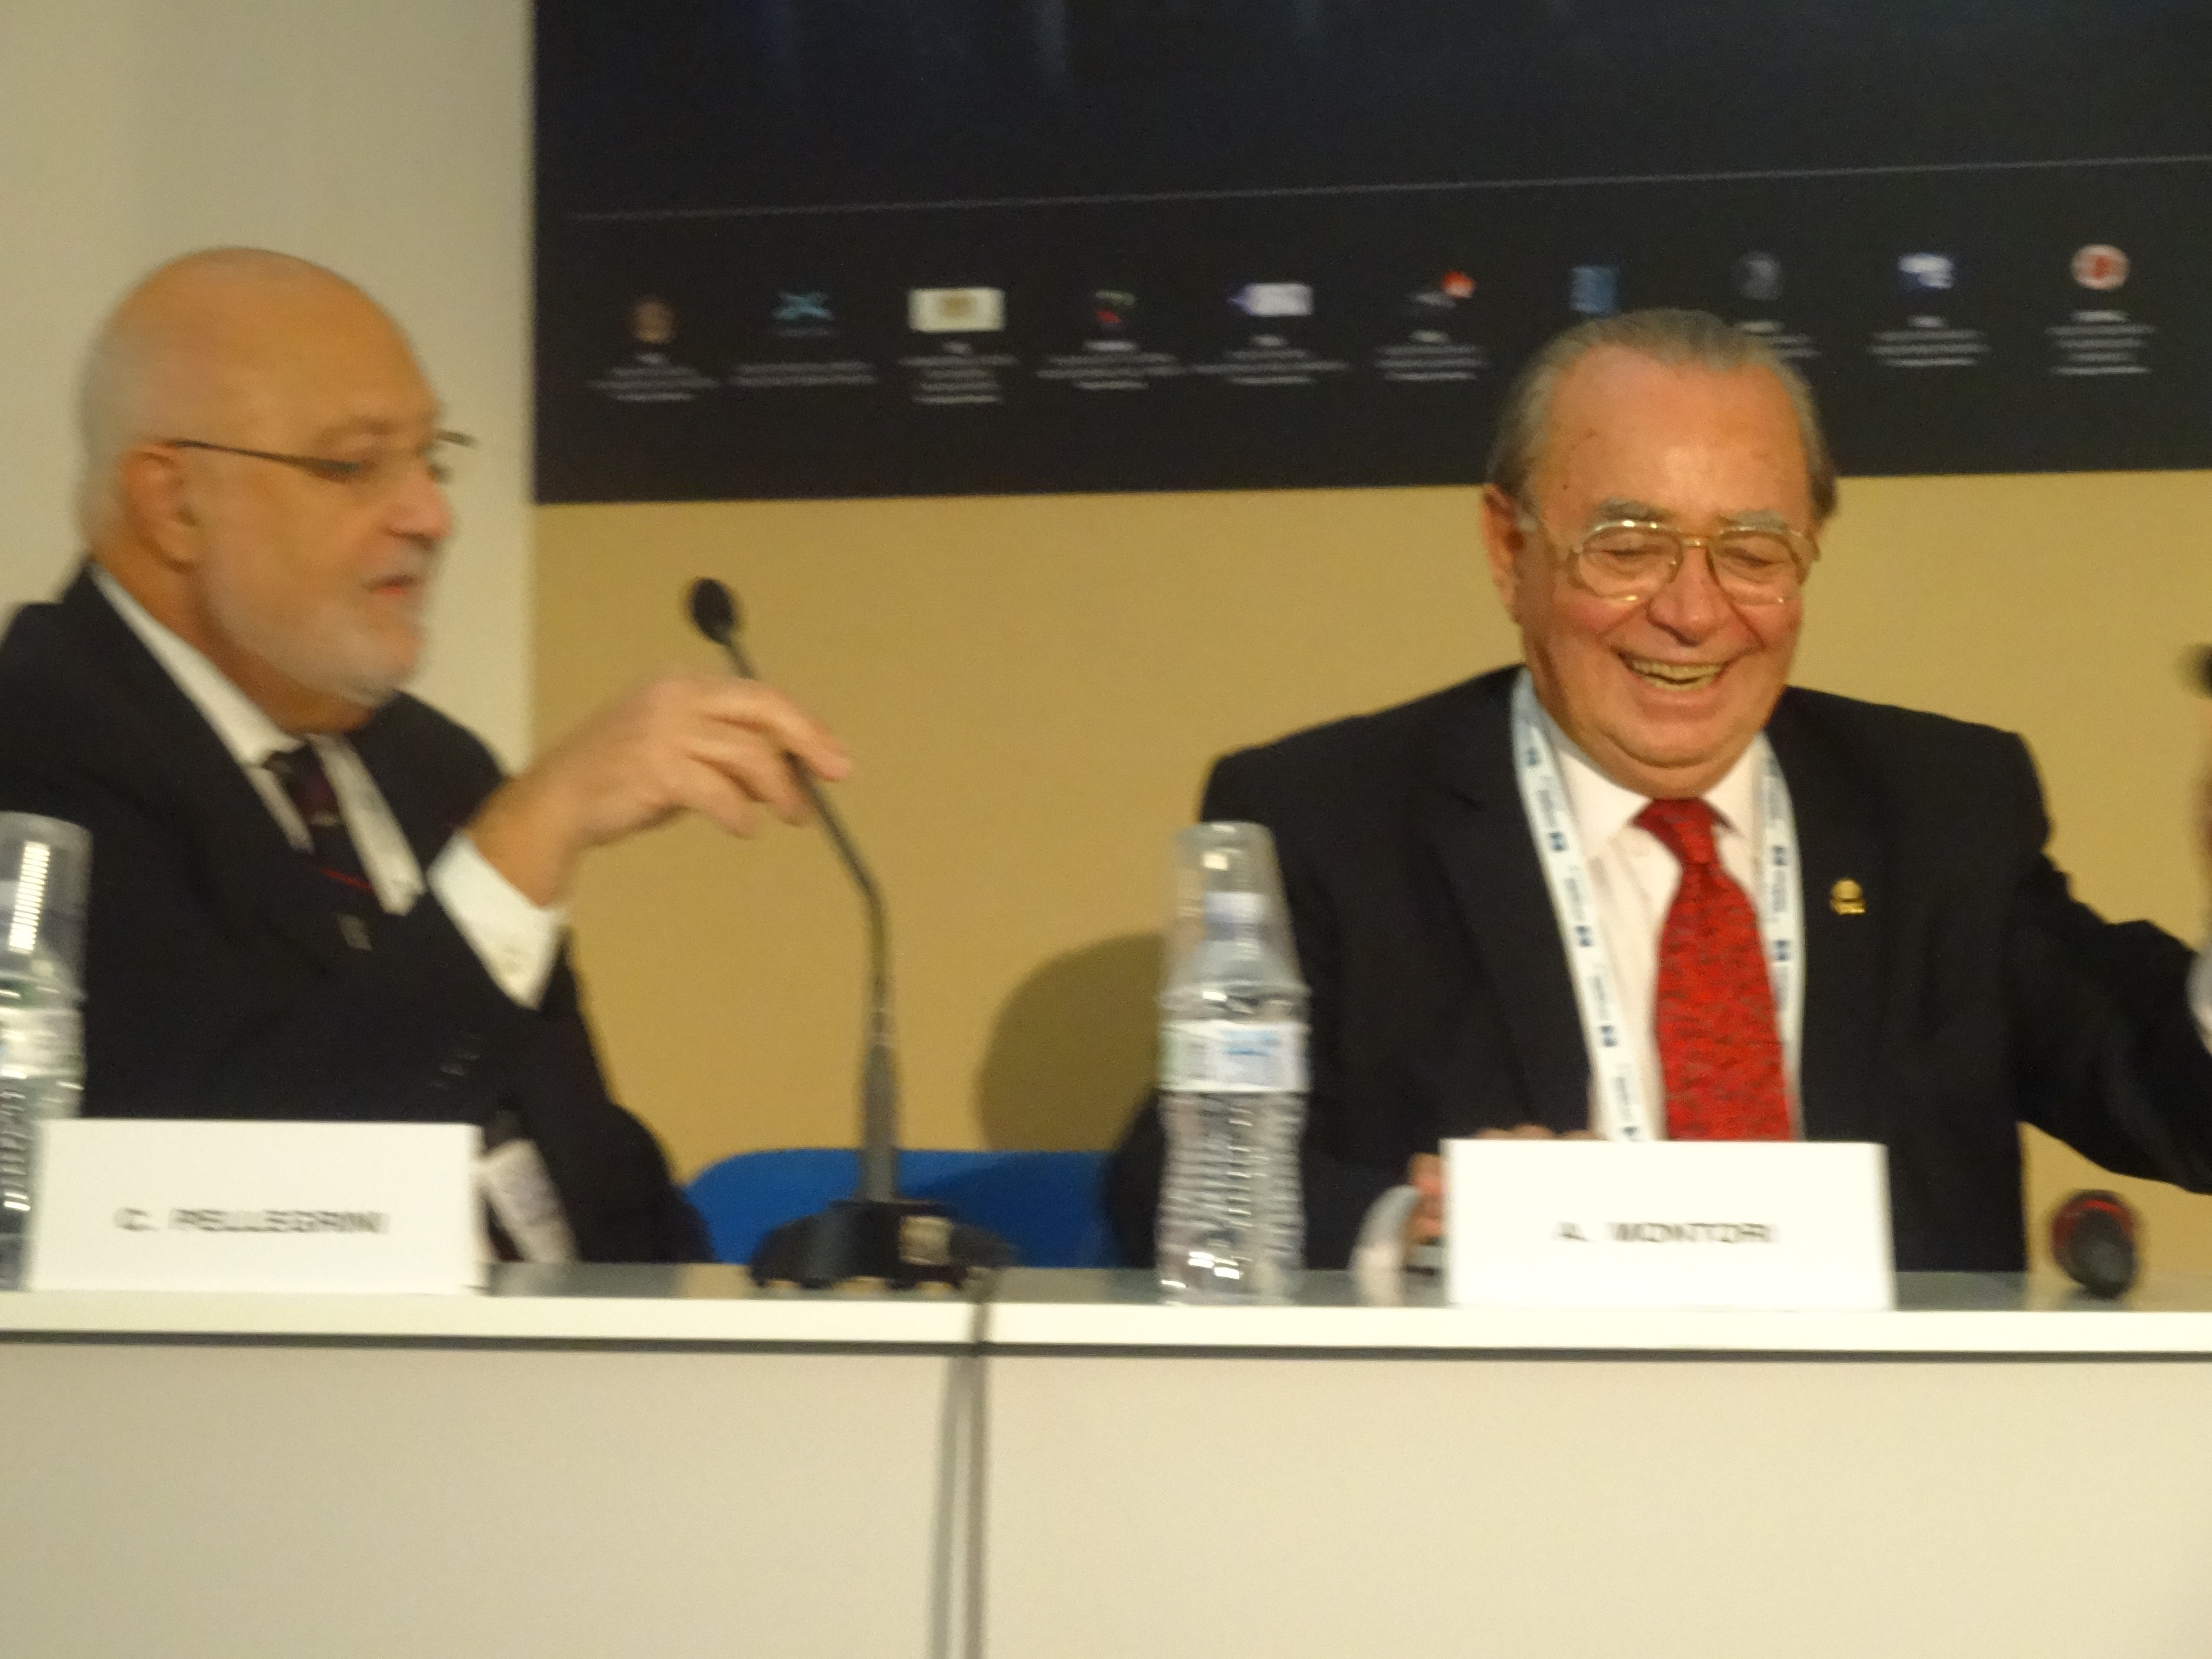 Dr. Pellegrini and Doctor Montori, Congress 2014